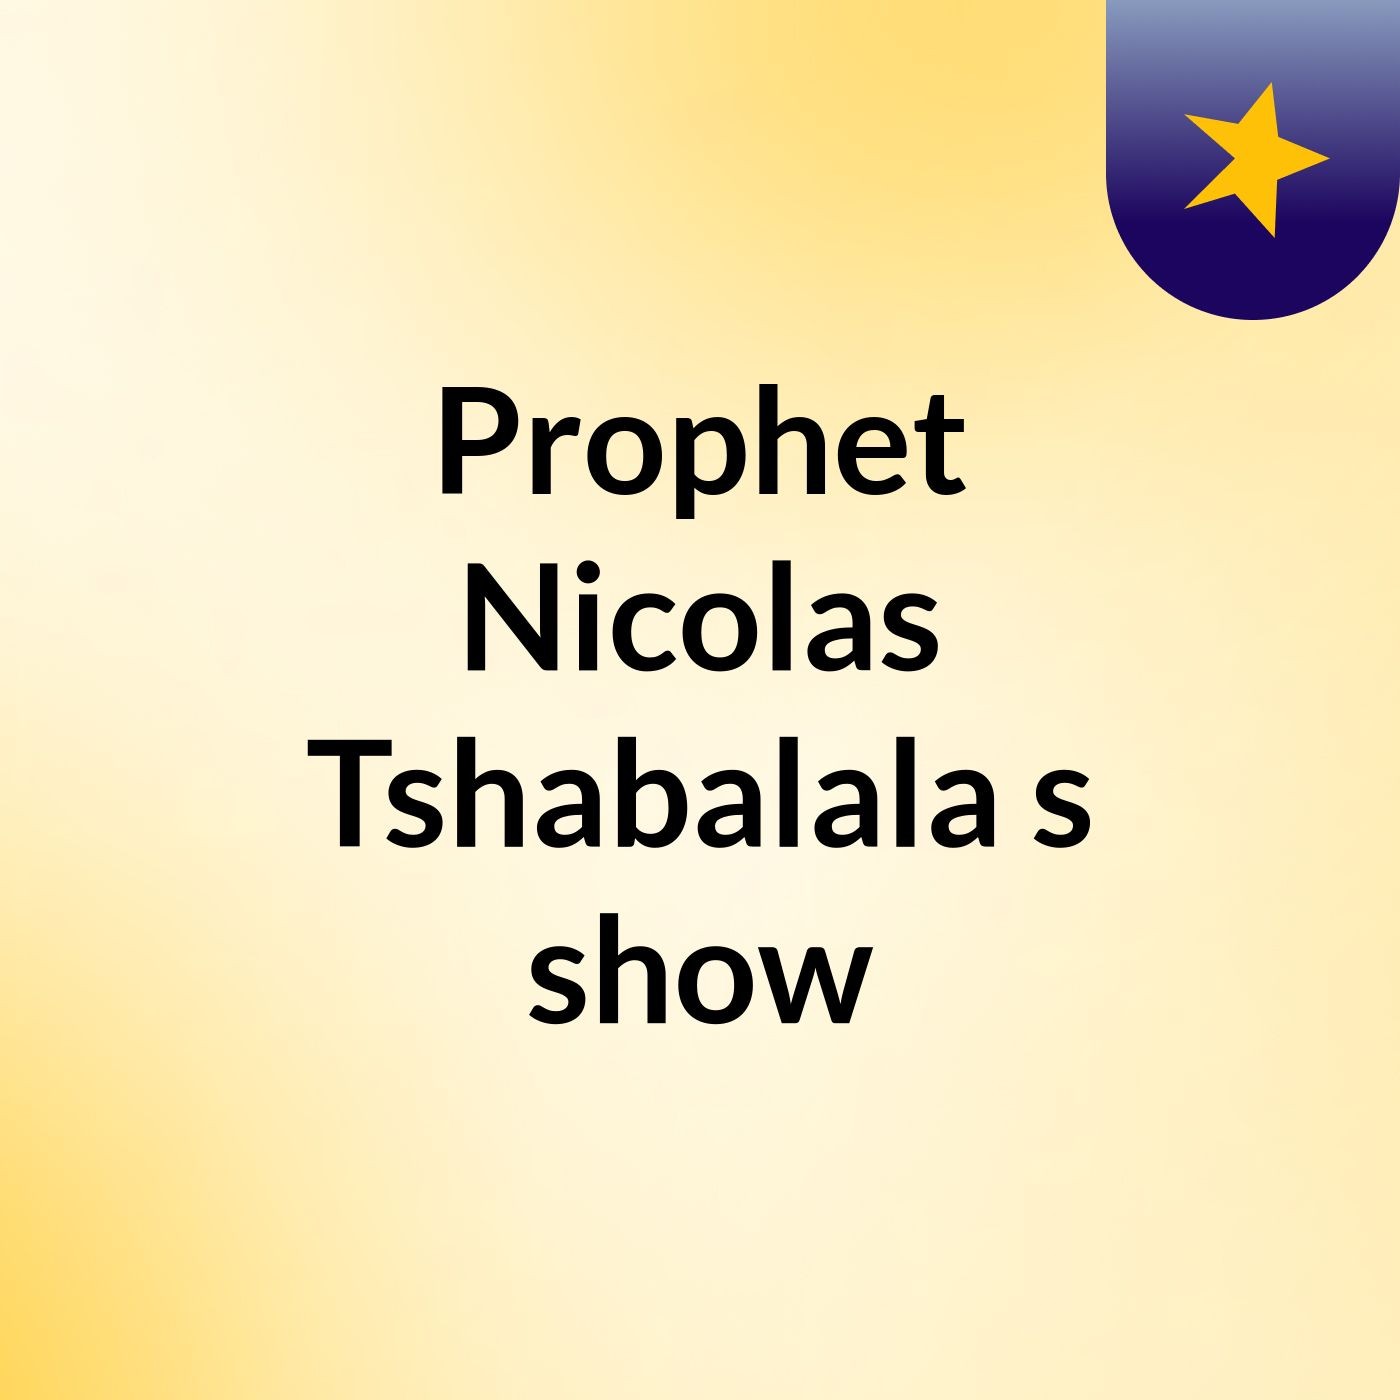 Prophet Nicolas Tshabalala's show